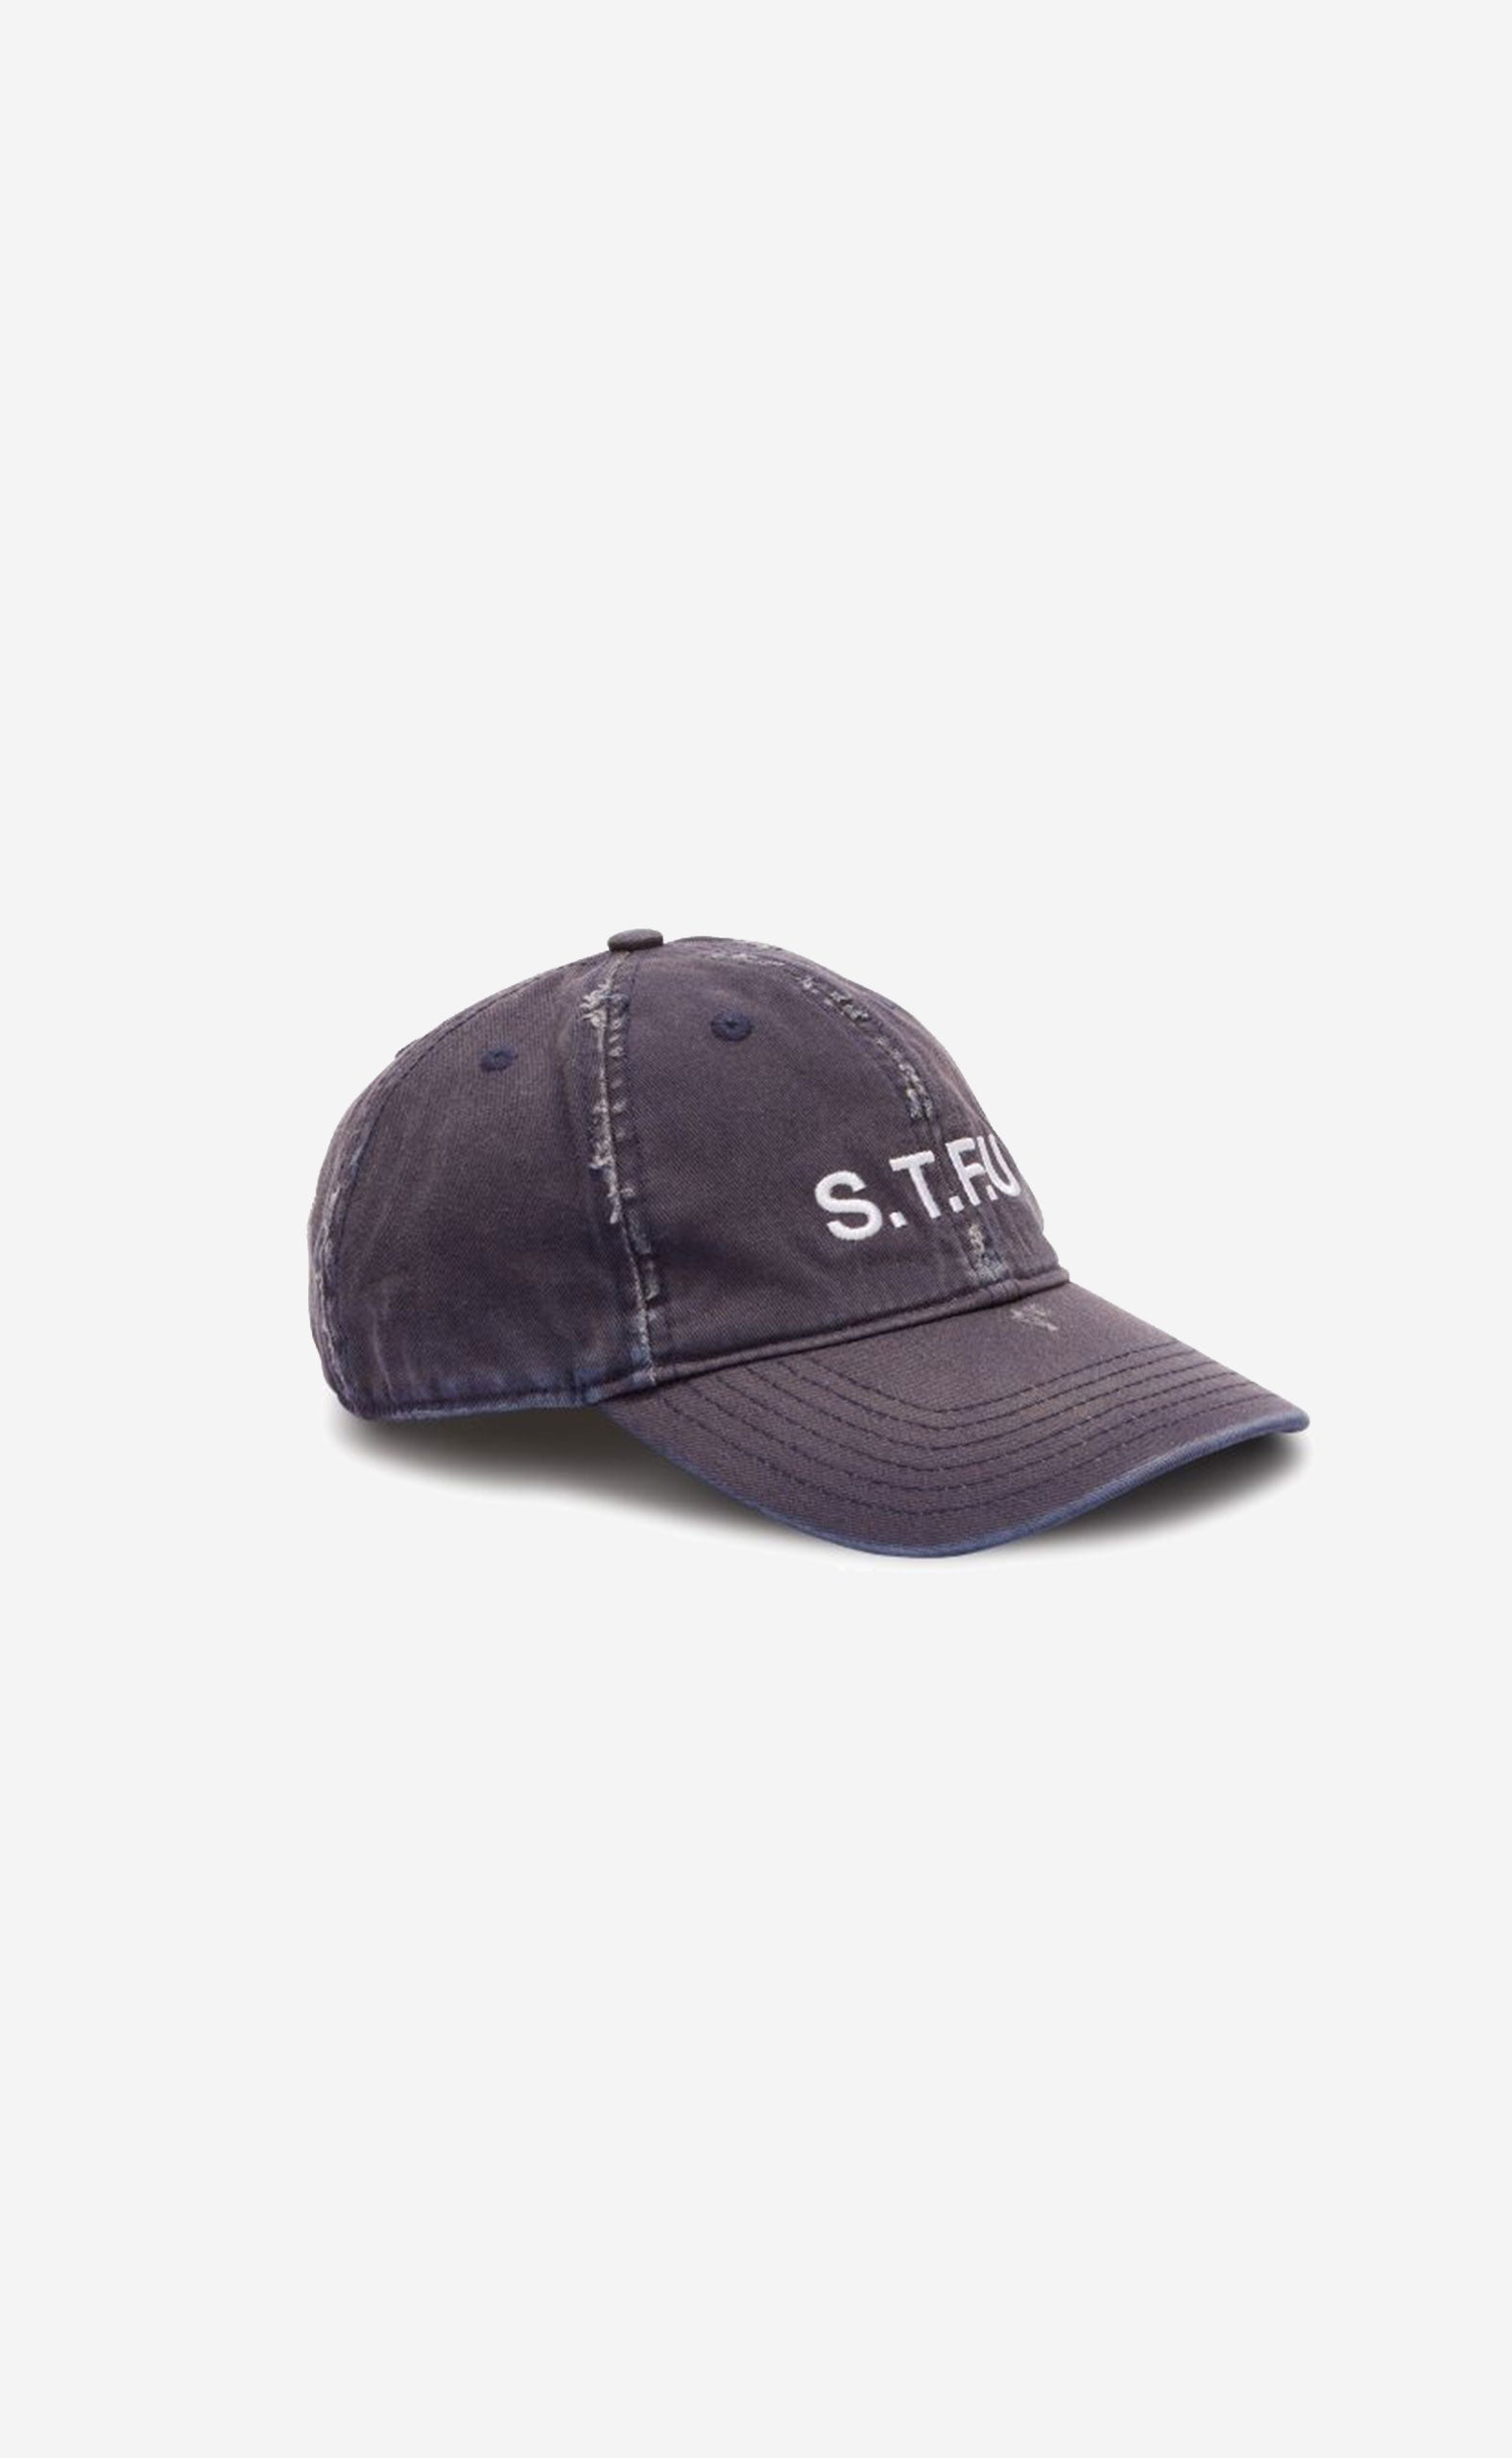 STFU DISTRESSED HAT BLUE  WHITE